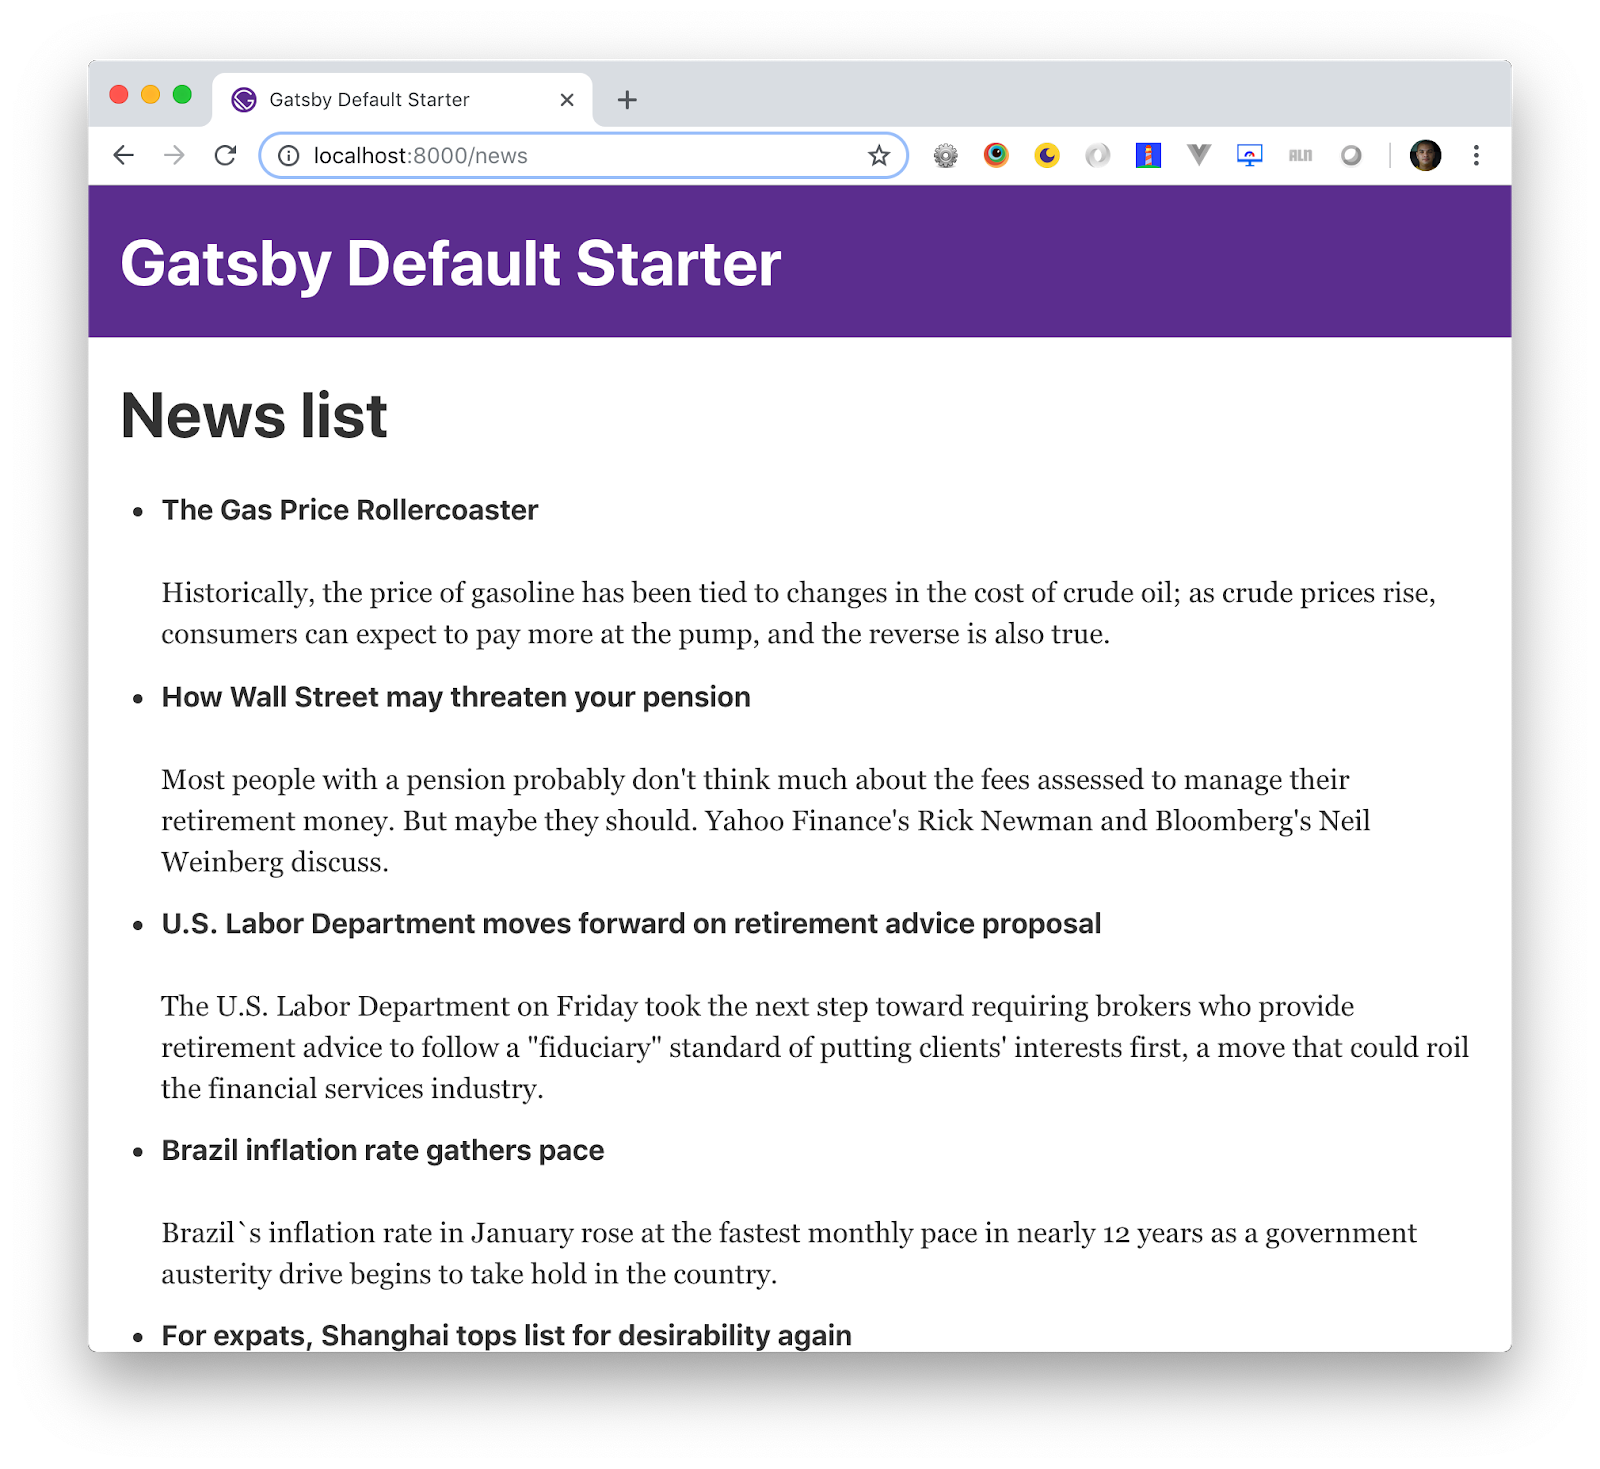 gatsby-default-starter-2